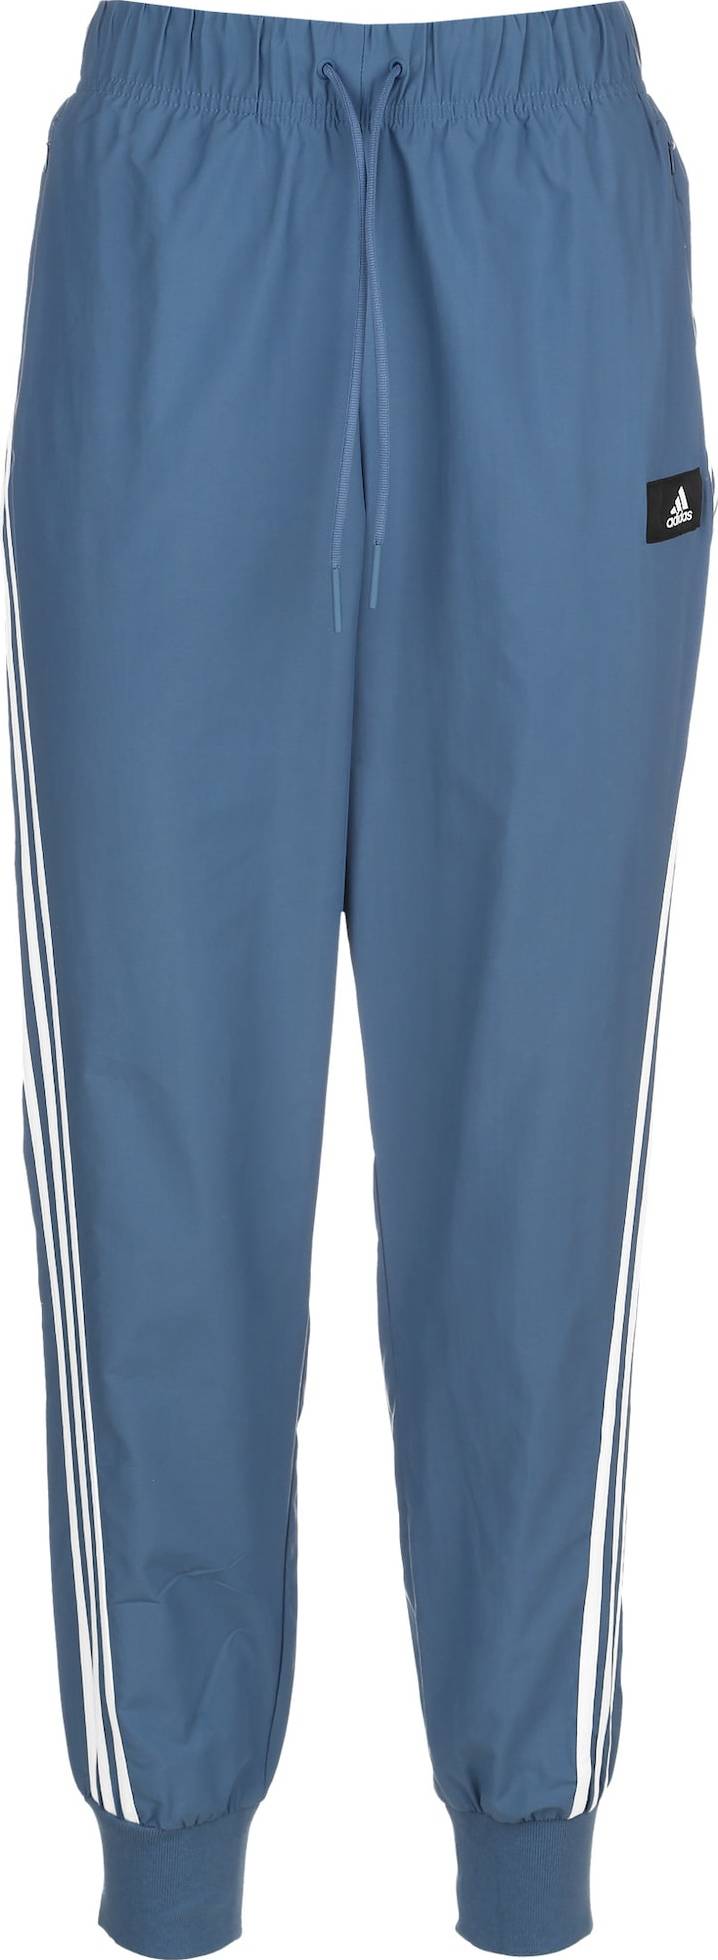 ADIDAS PERFORMANCE Sportovní kalhoty chladná modrá / bílá